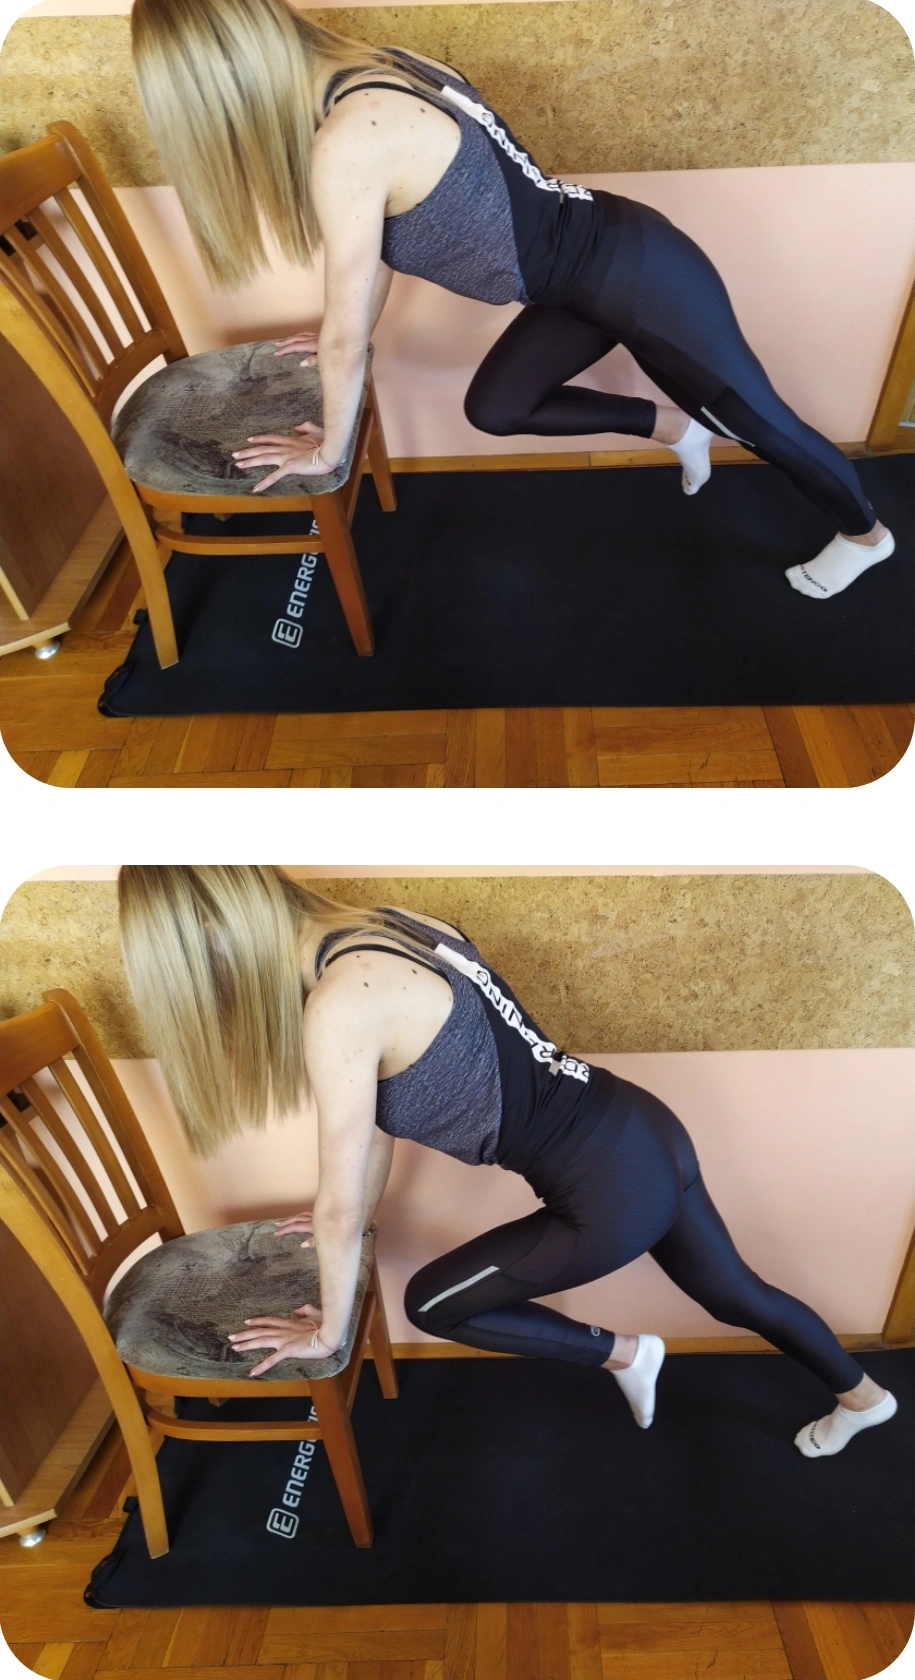 10 упражнения с помощта на стол